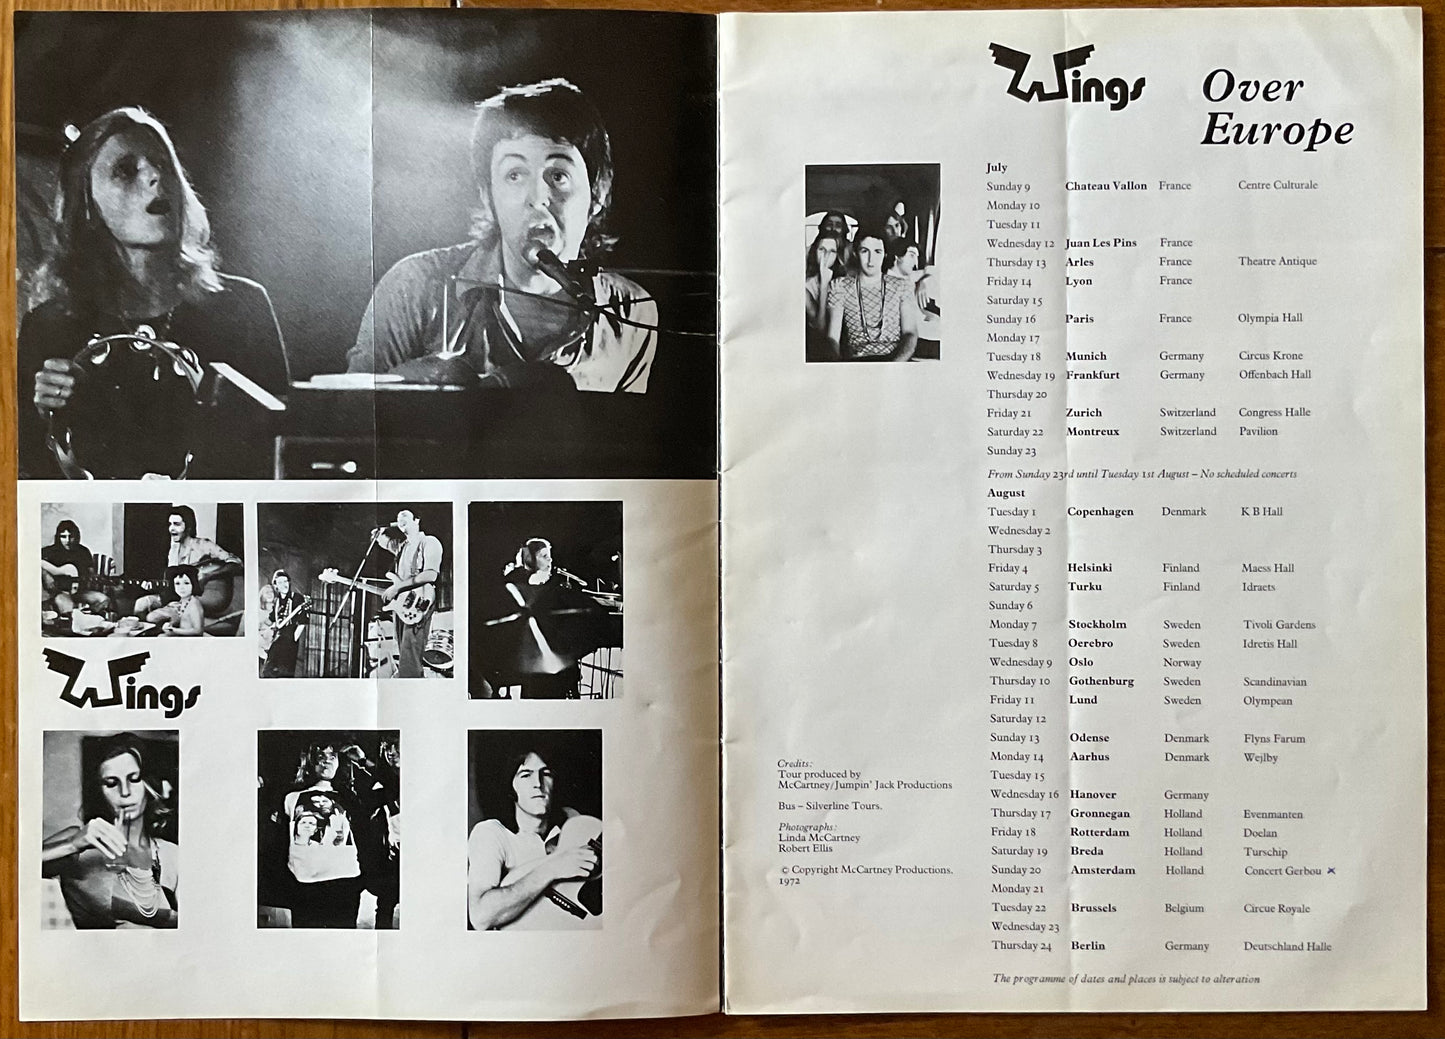 Beatles Paul McCartney Wings Original Concert Programme European Tour 1972